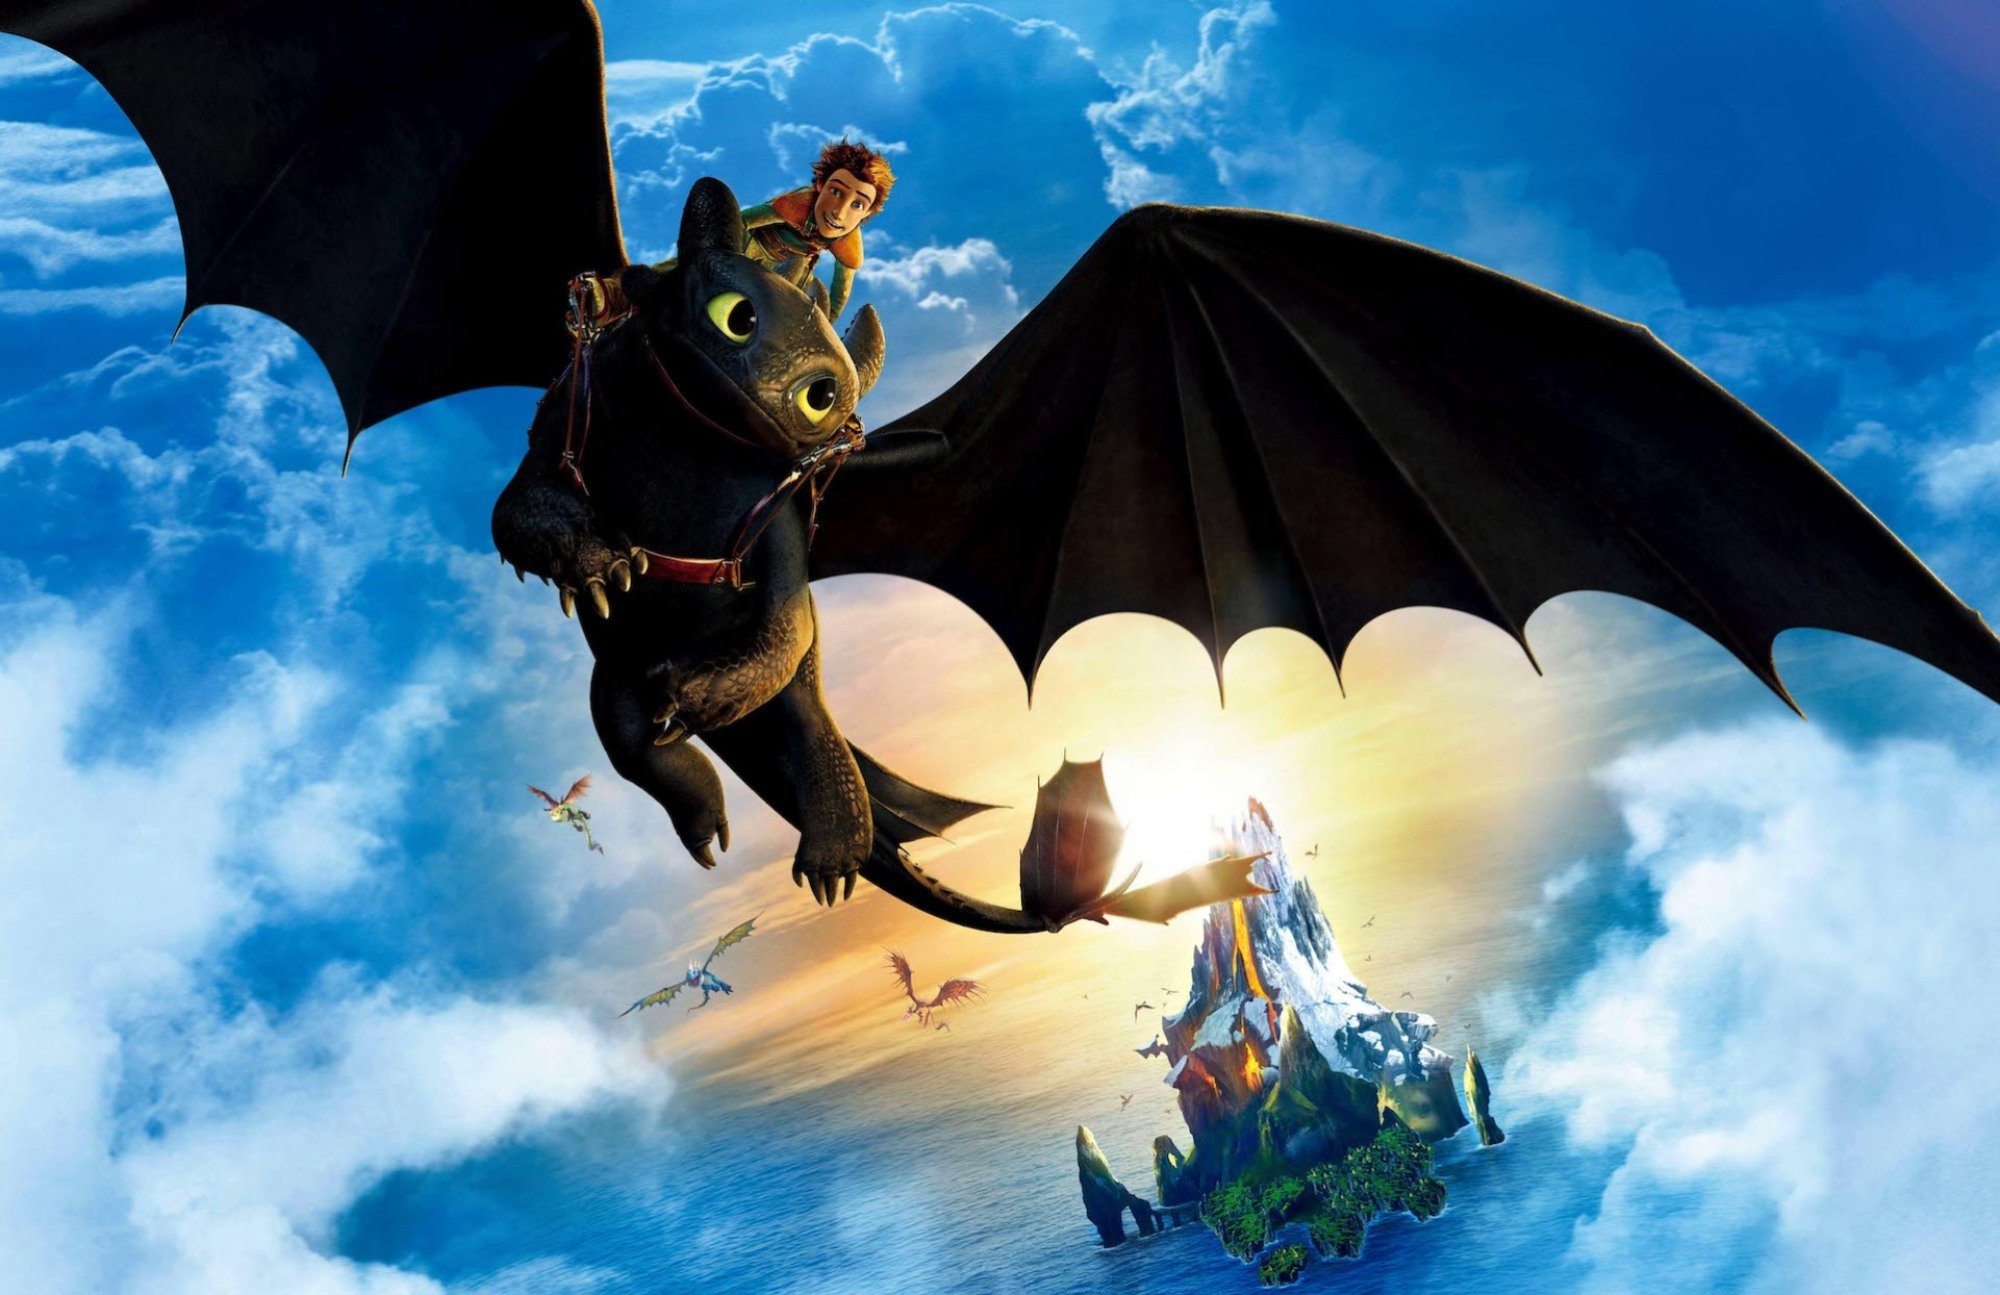 A boy rides a dragon through the sky, land in the distance.